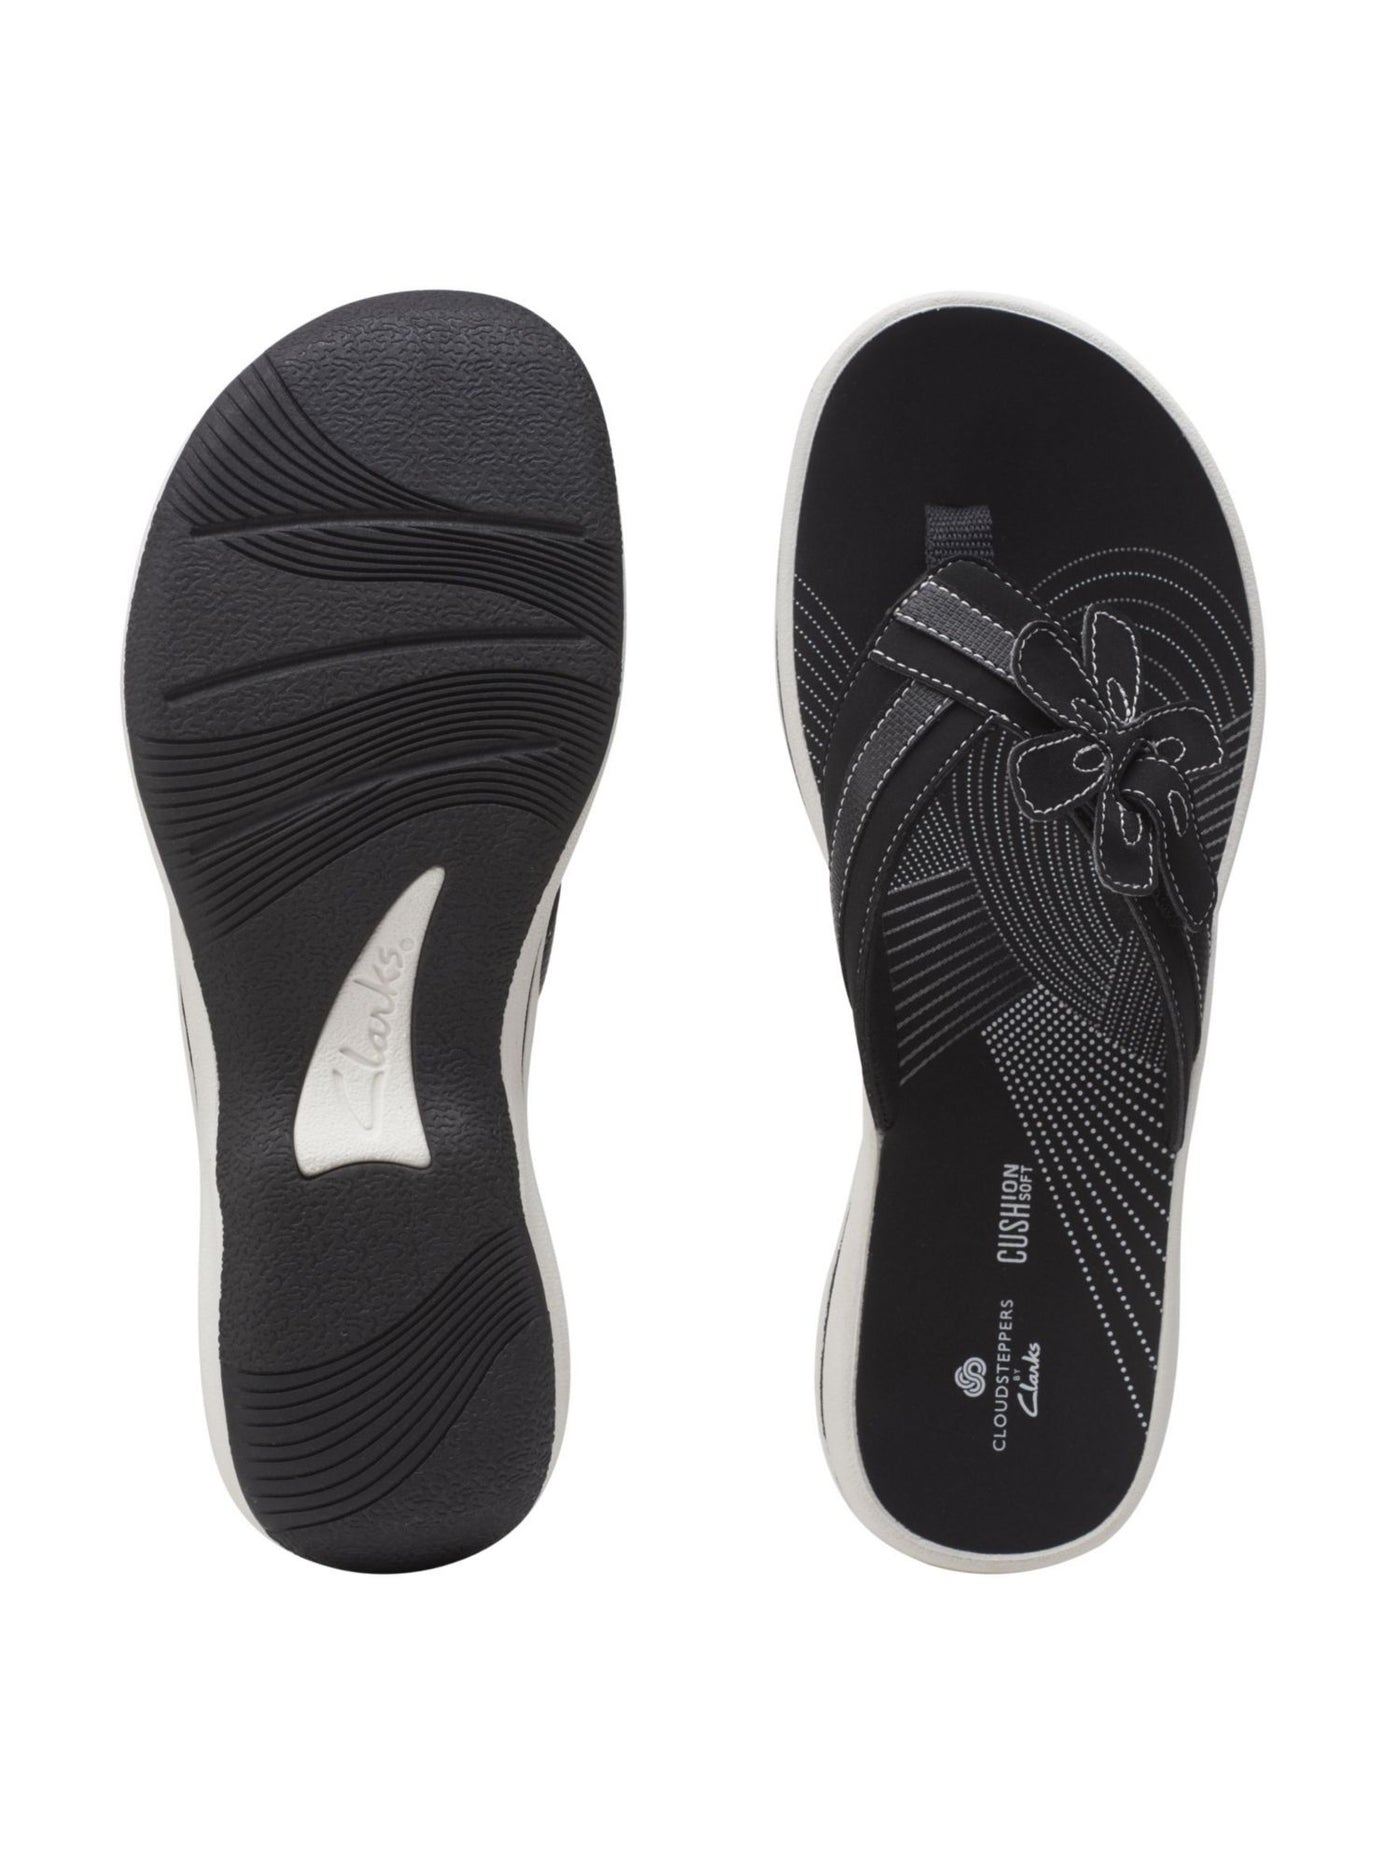 CLARKS Womens Black Adjustable Cushioned Brinkley Flora Round Toe Slip On Flip Flop Sandal 7 M